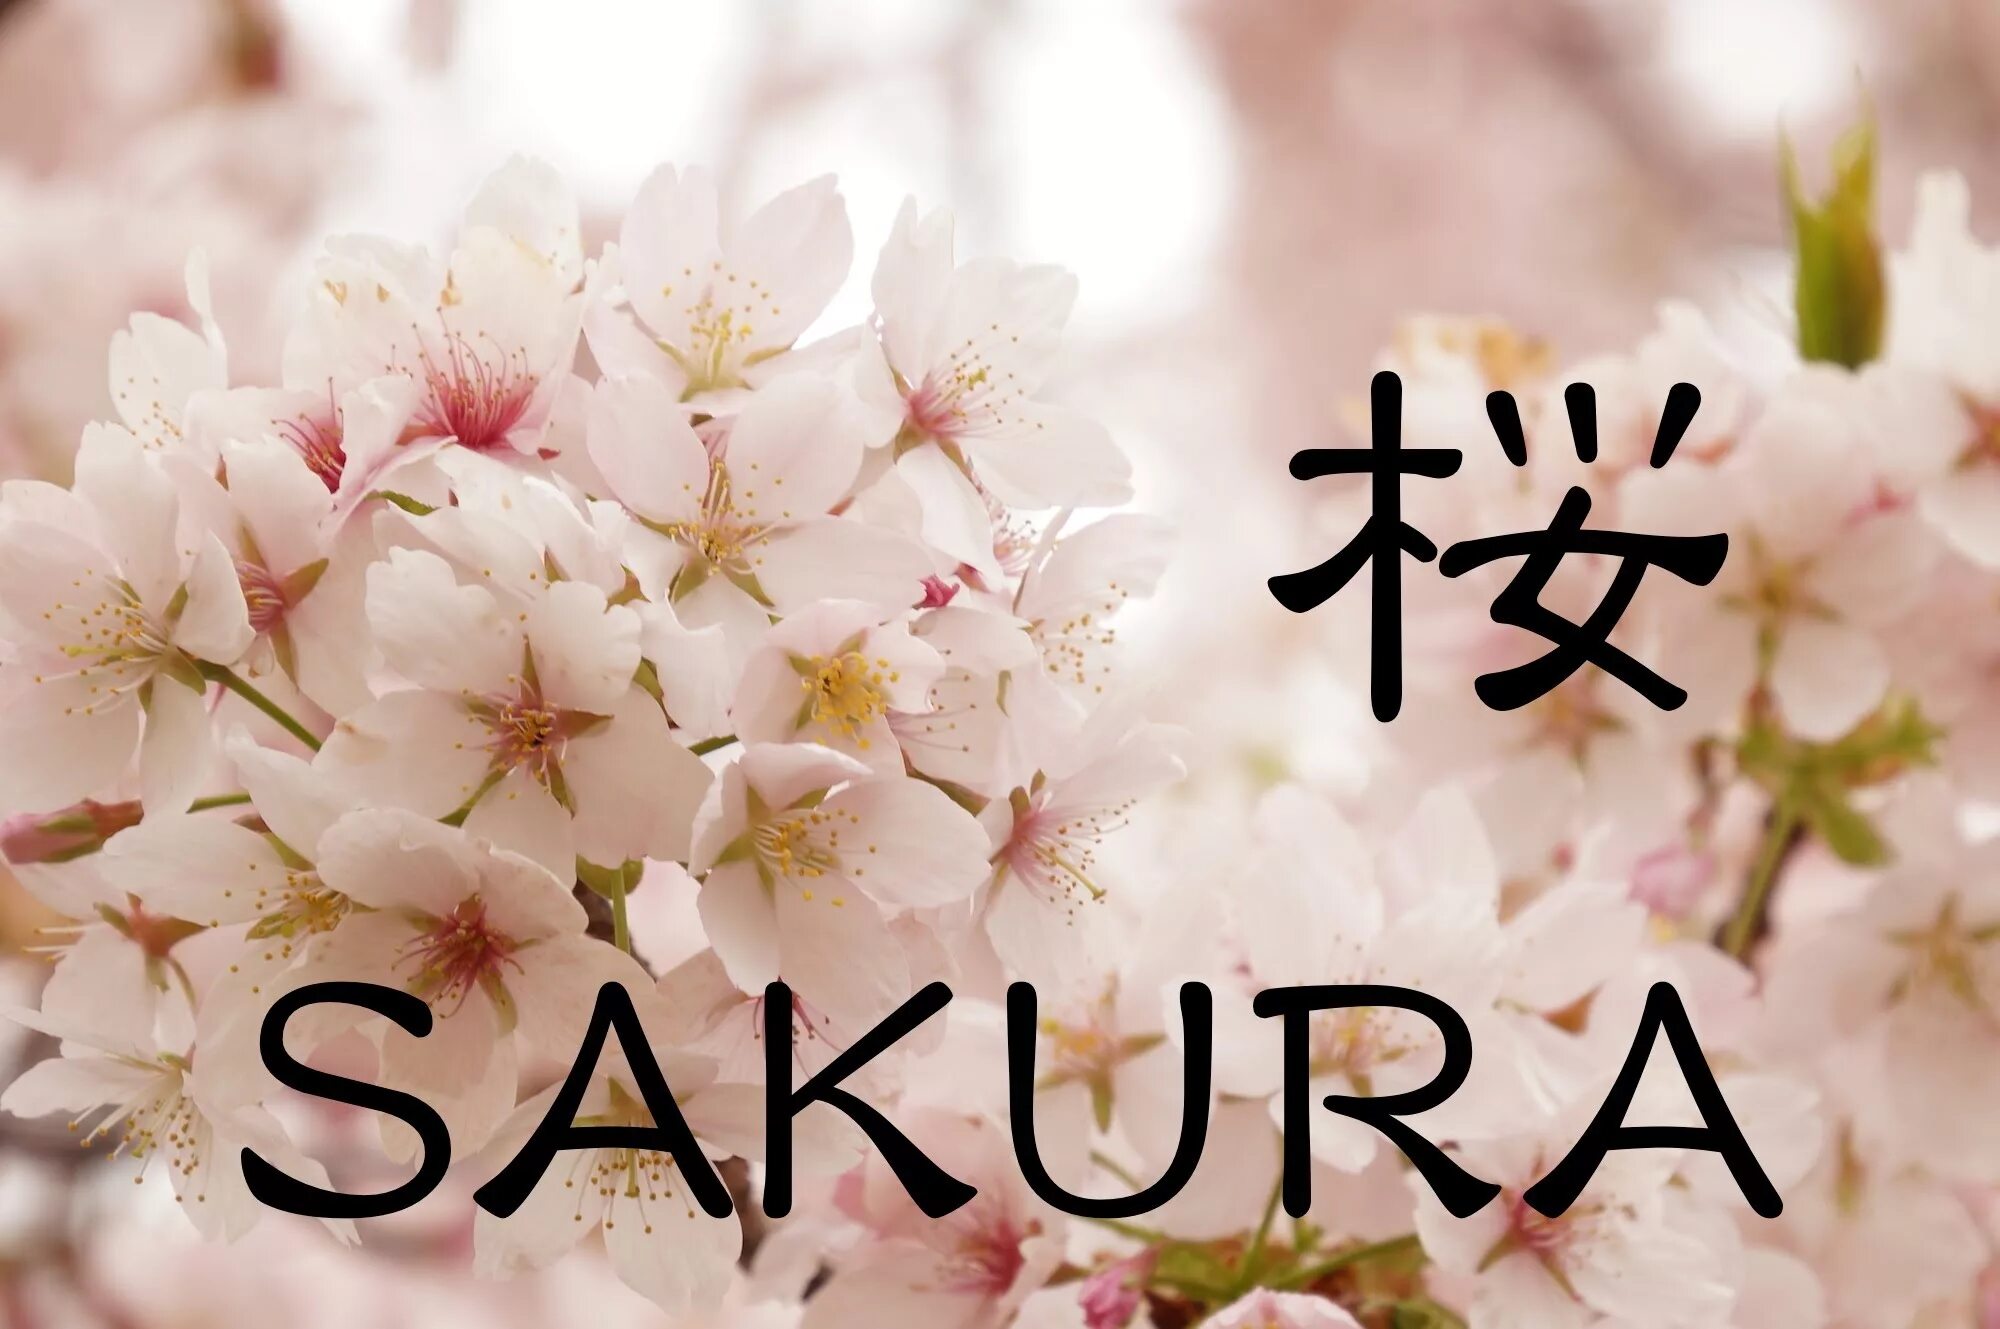 Сакура надпись. Сакура имя. Японская Сакура. Иероглиф Сакура.